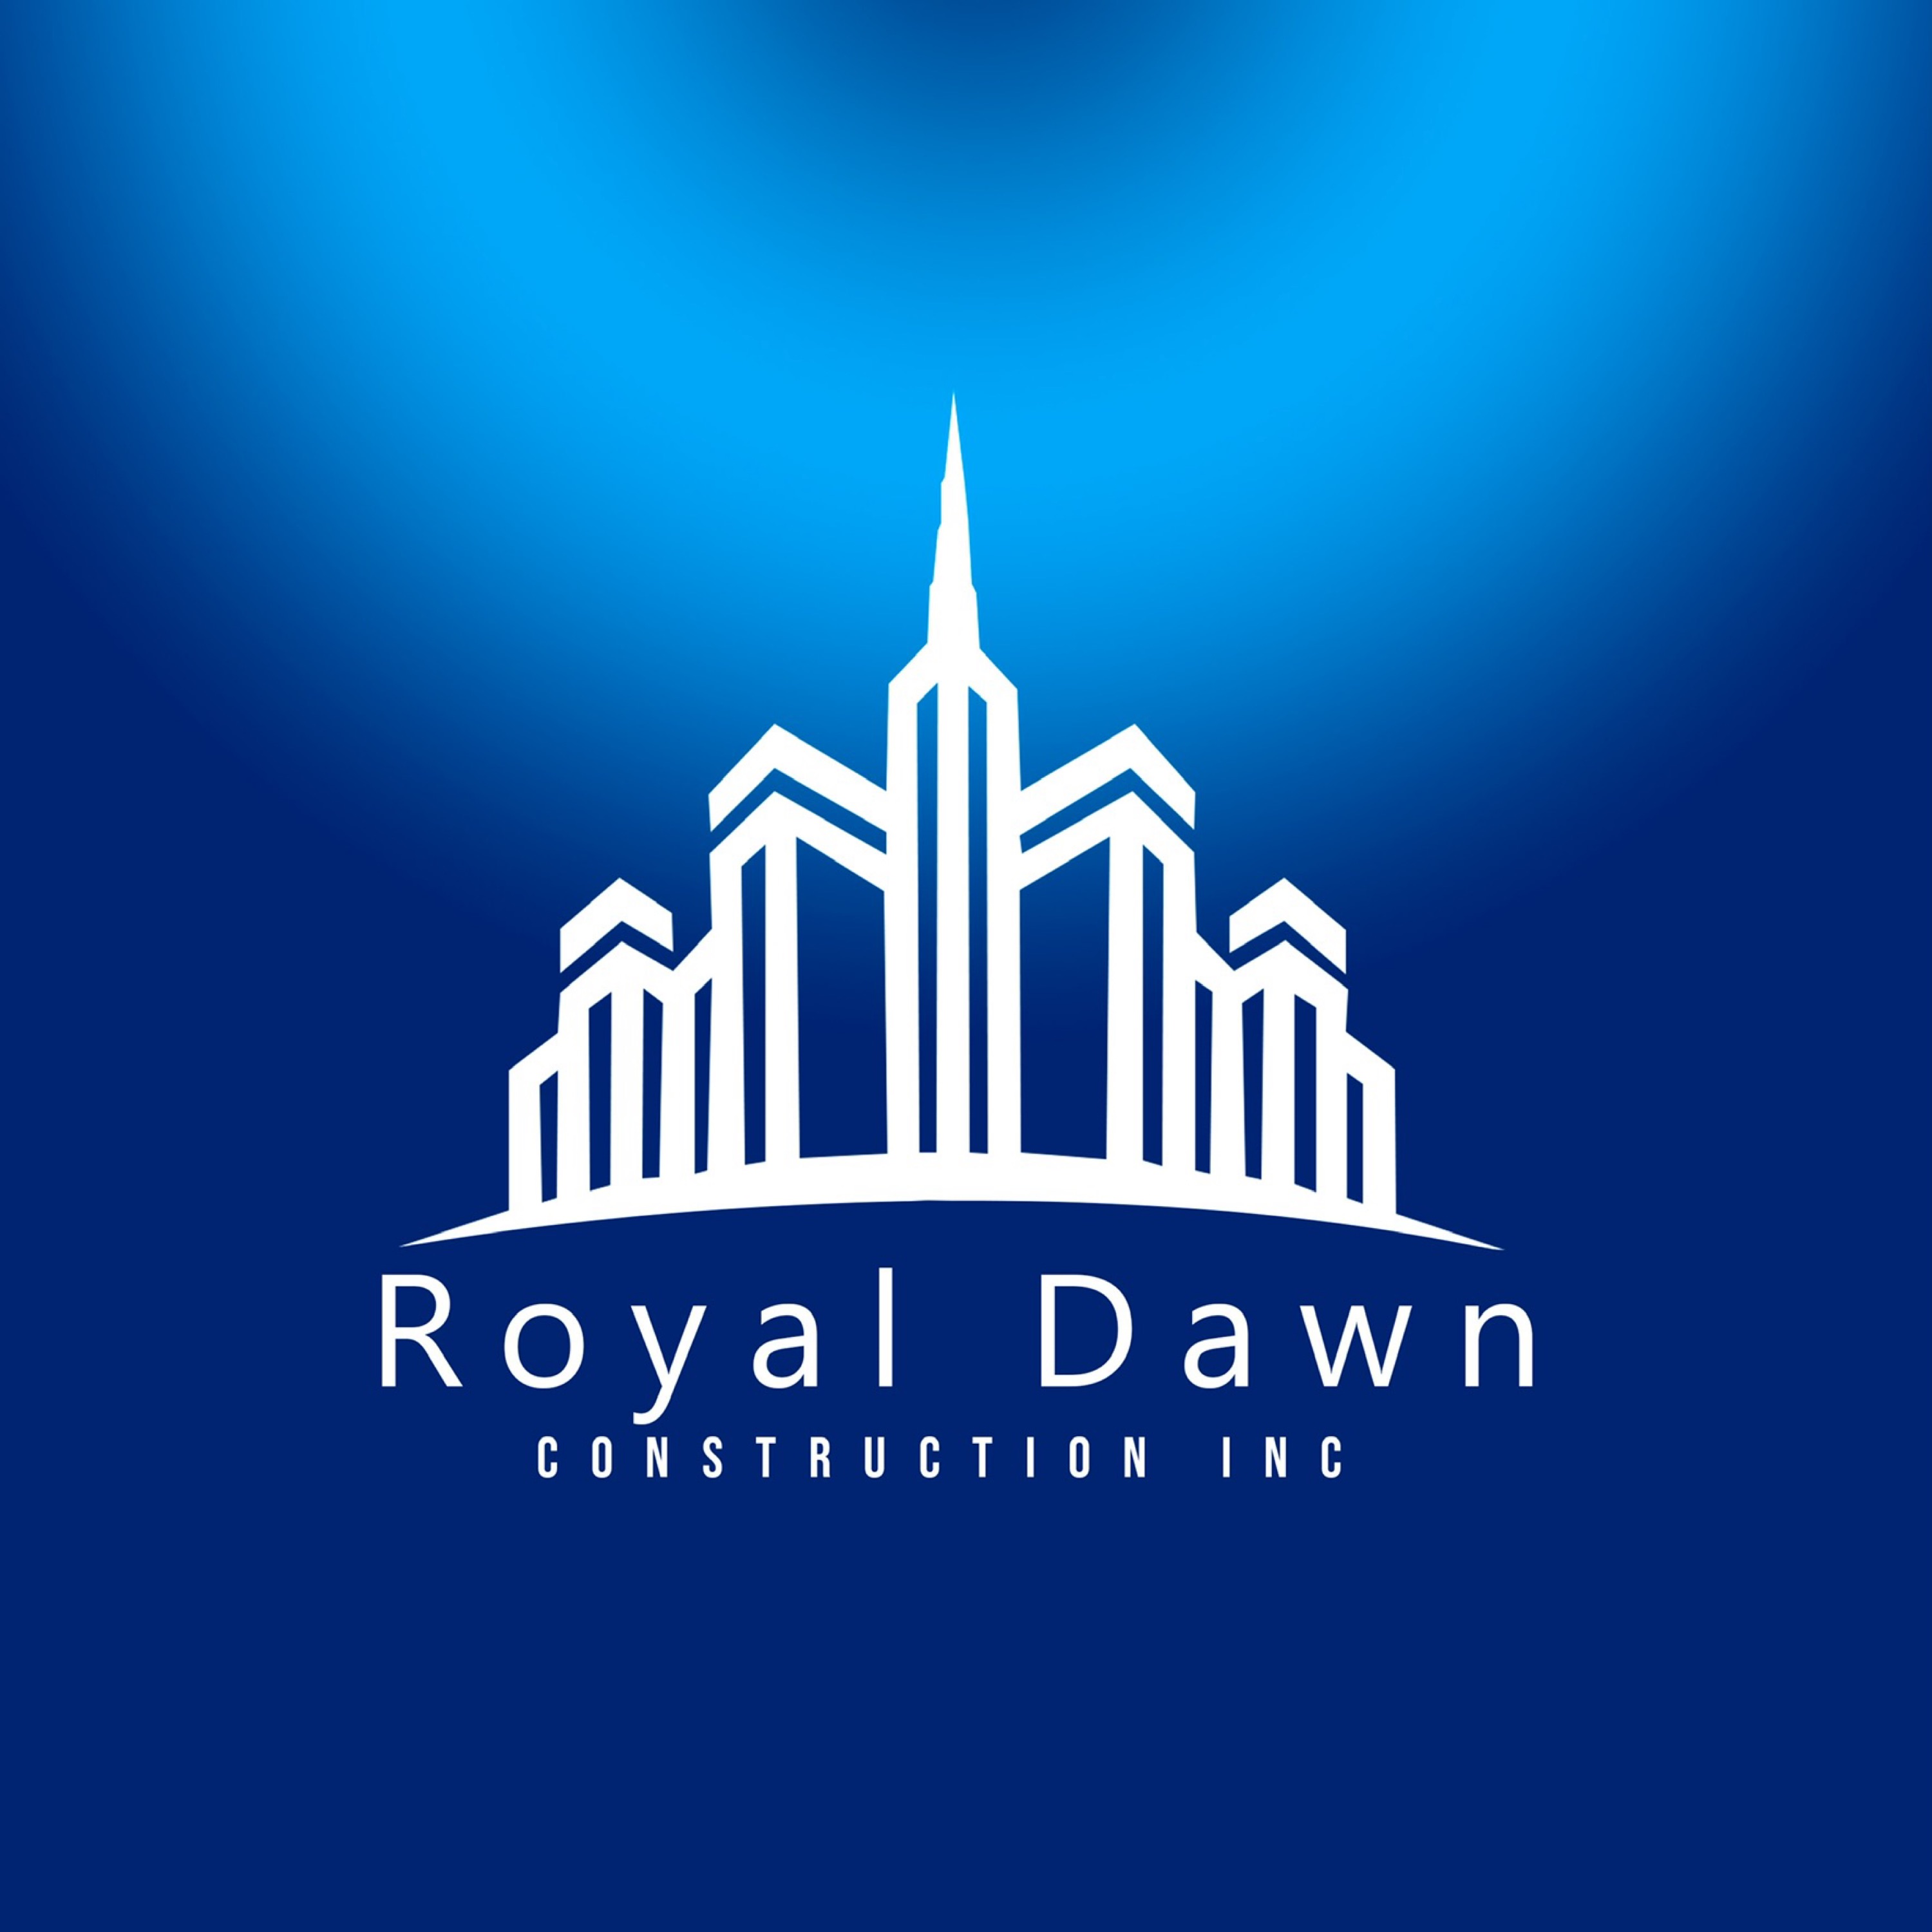 Royal Dawn Construction, Inc. Logo